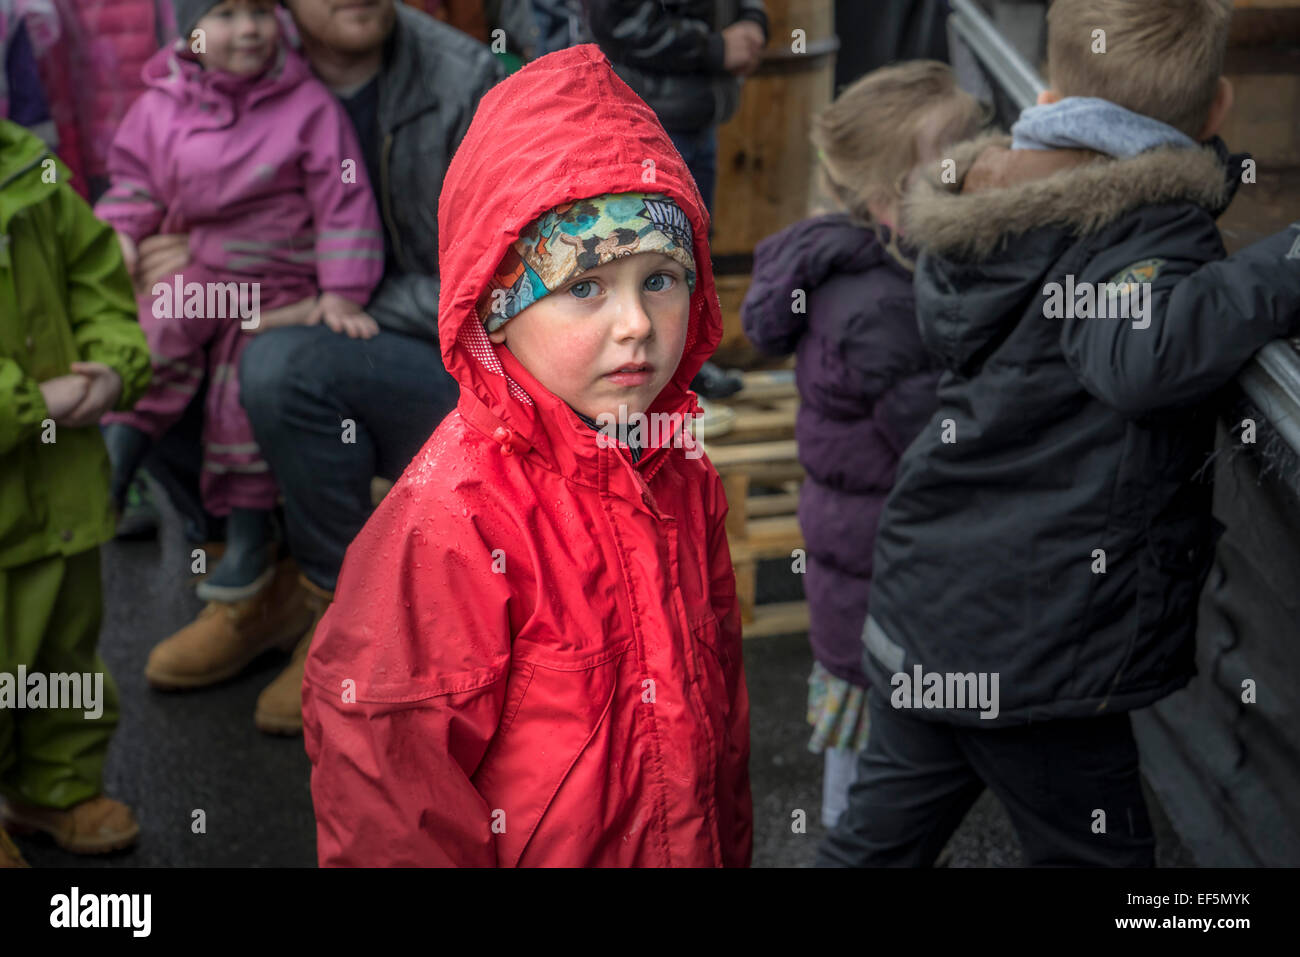 Child wearing a raincoat, Seaman's Festival, Reykjavik, Iceland Stock Photo